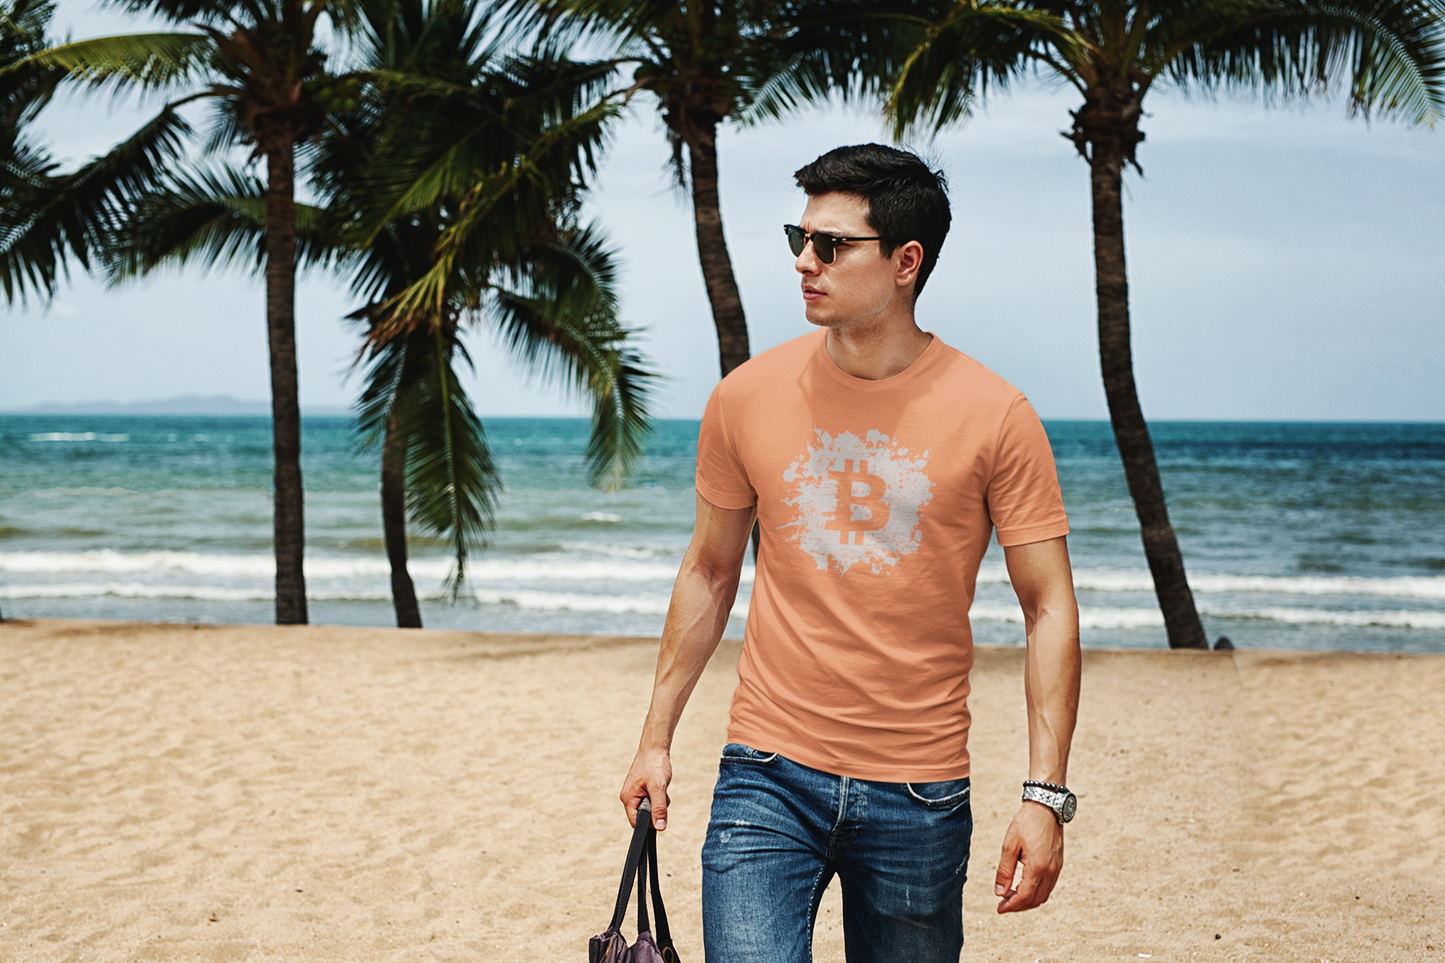 Bitcoin 'ATH' Achievement Unisex T-Shirt - Soft Ring-Spun Cotton - Crypto Enthusiasts Tee